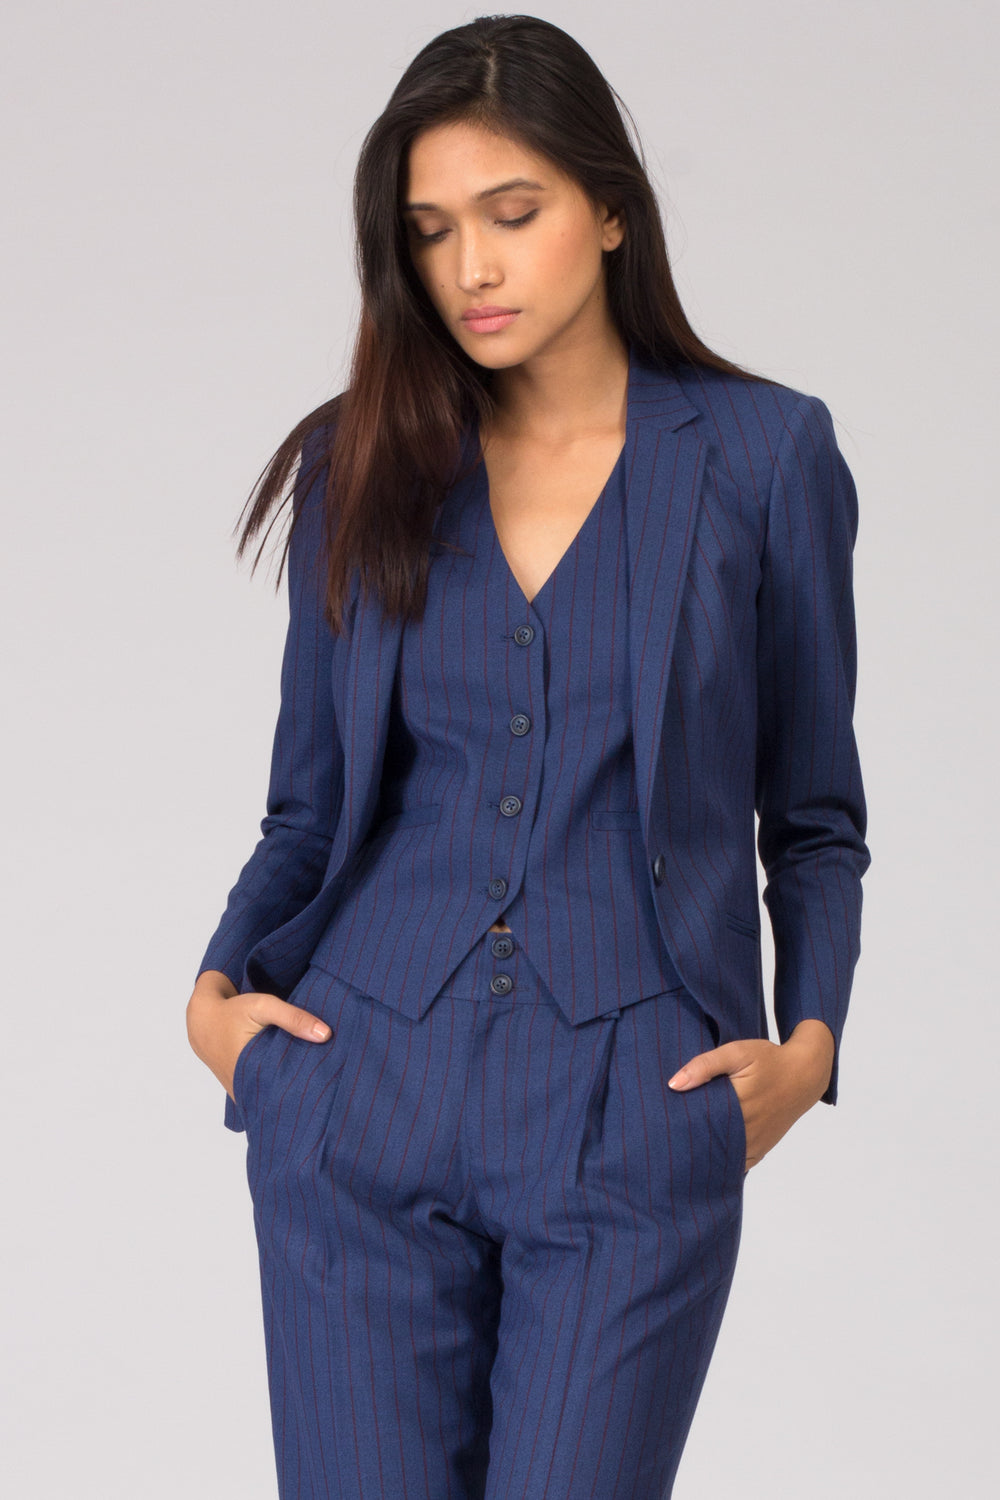 Amazoncom Navy Blue Pants Suits For Women